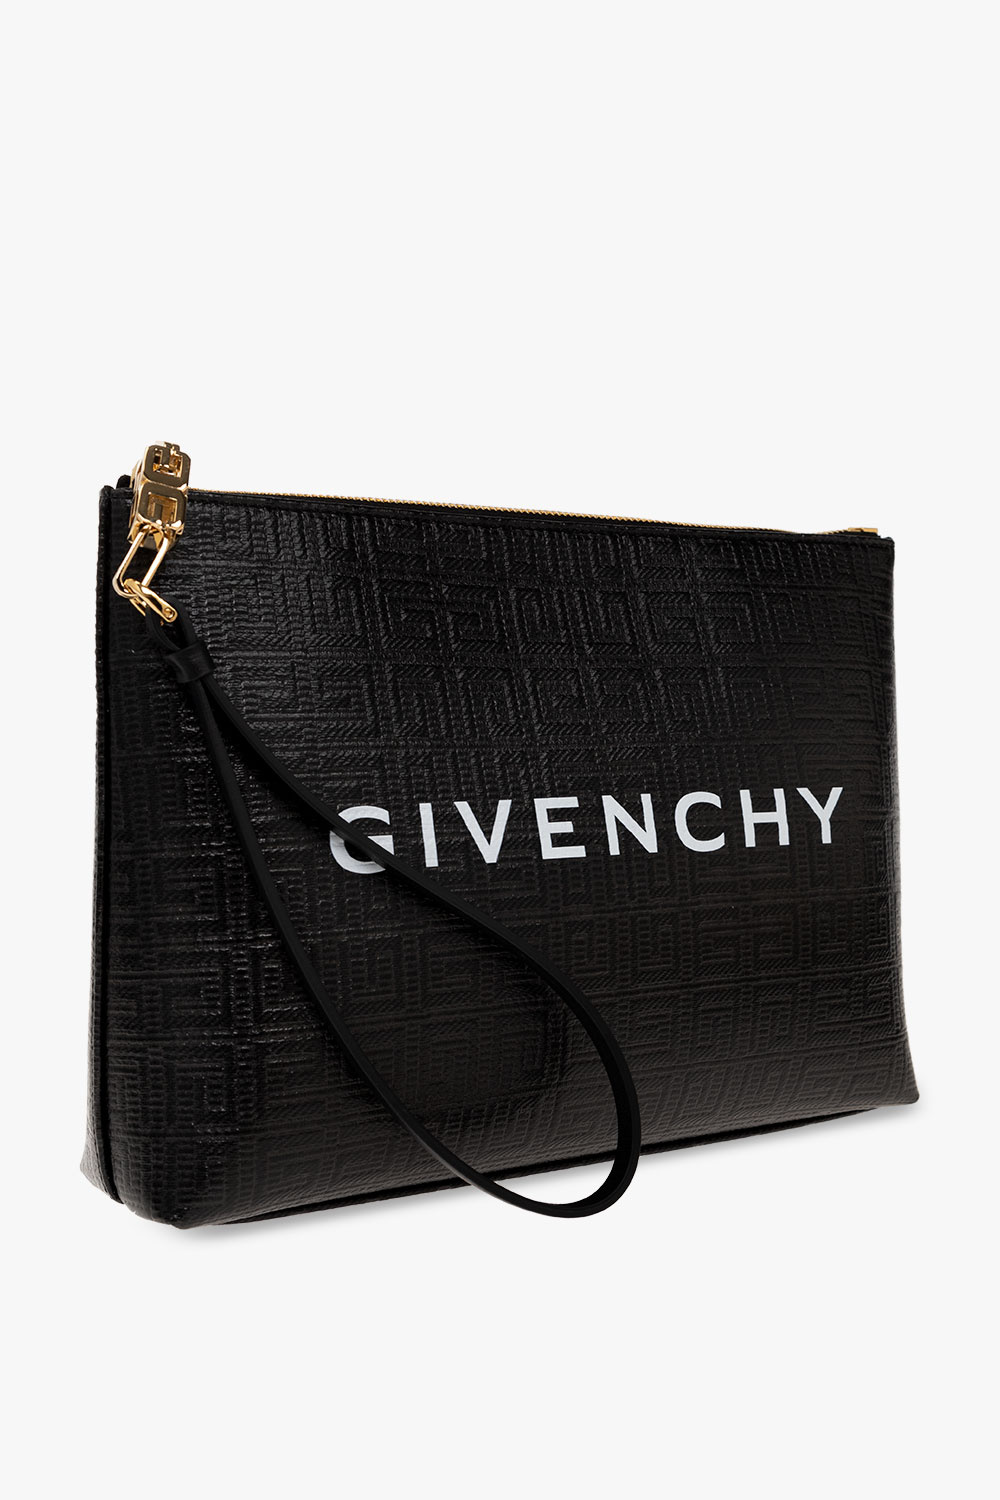 givenchy organizer Monogrammed handbag